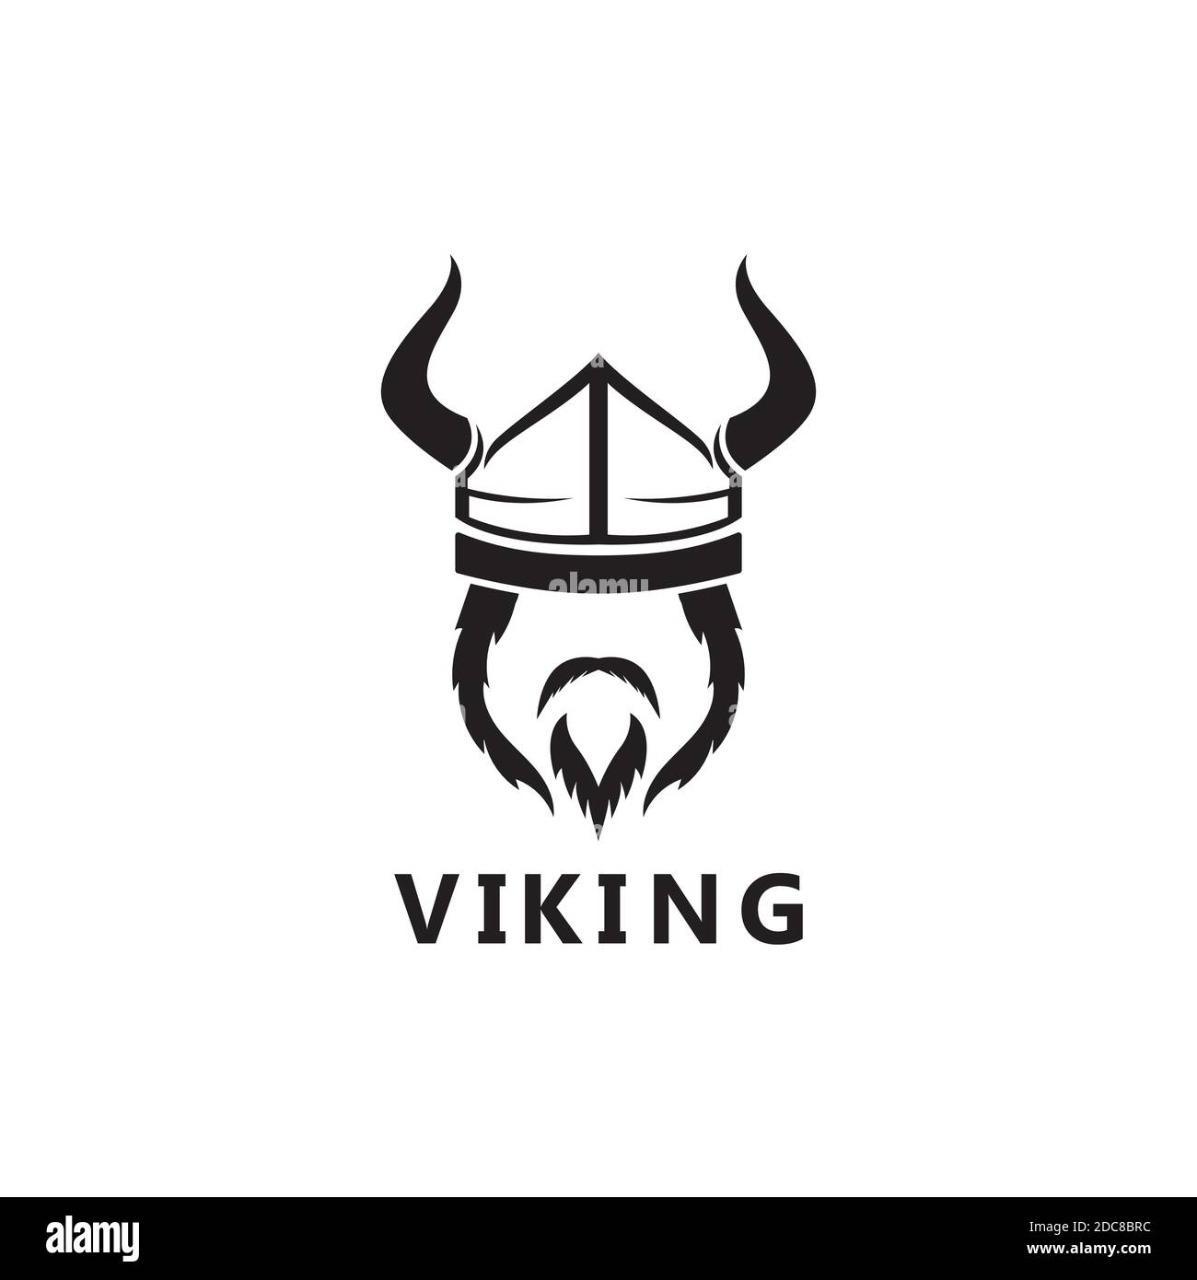 Vikingo95?s=8m3ko+yn45a1lvdz5+zqqle46fgedfh5phbklofxyy4=